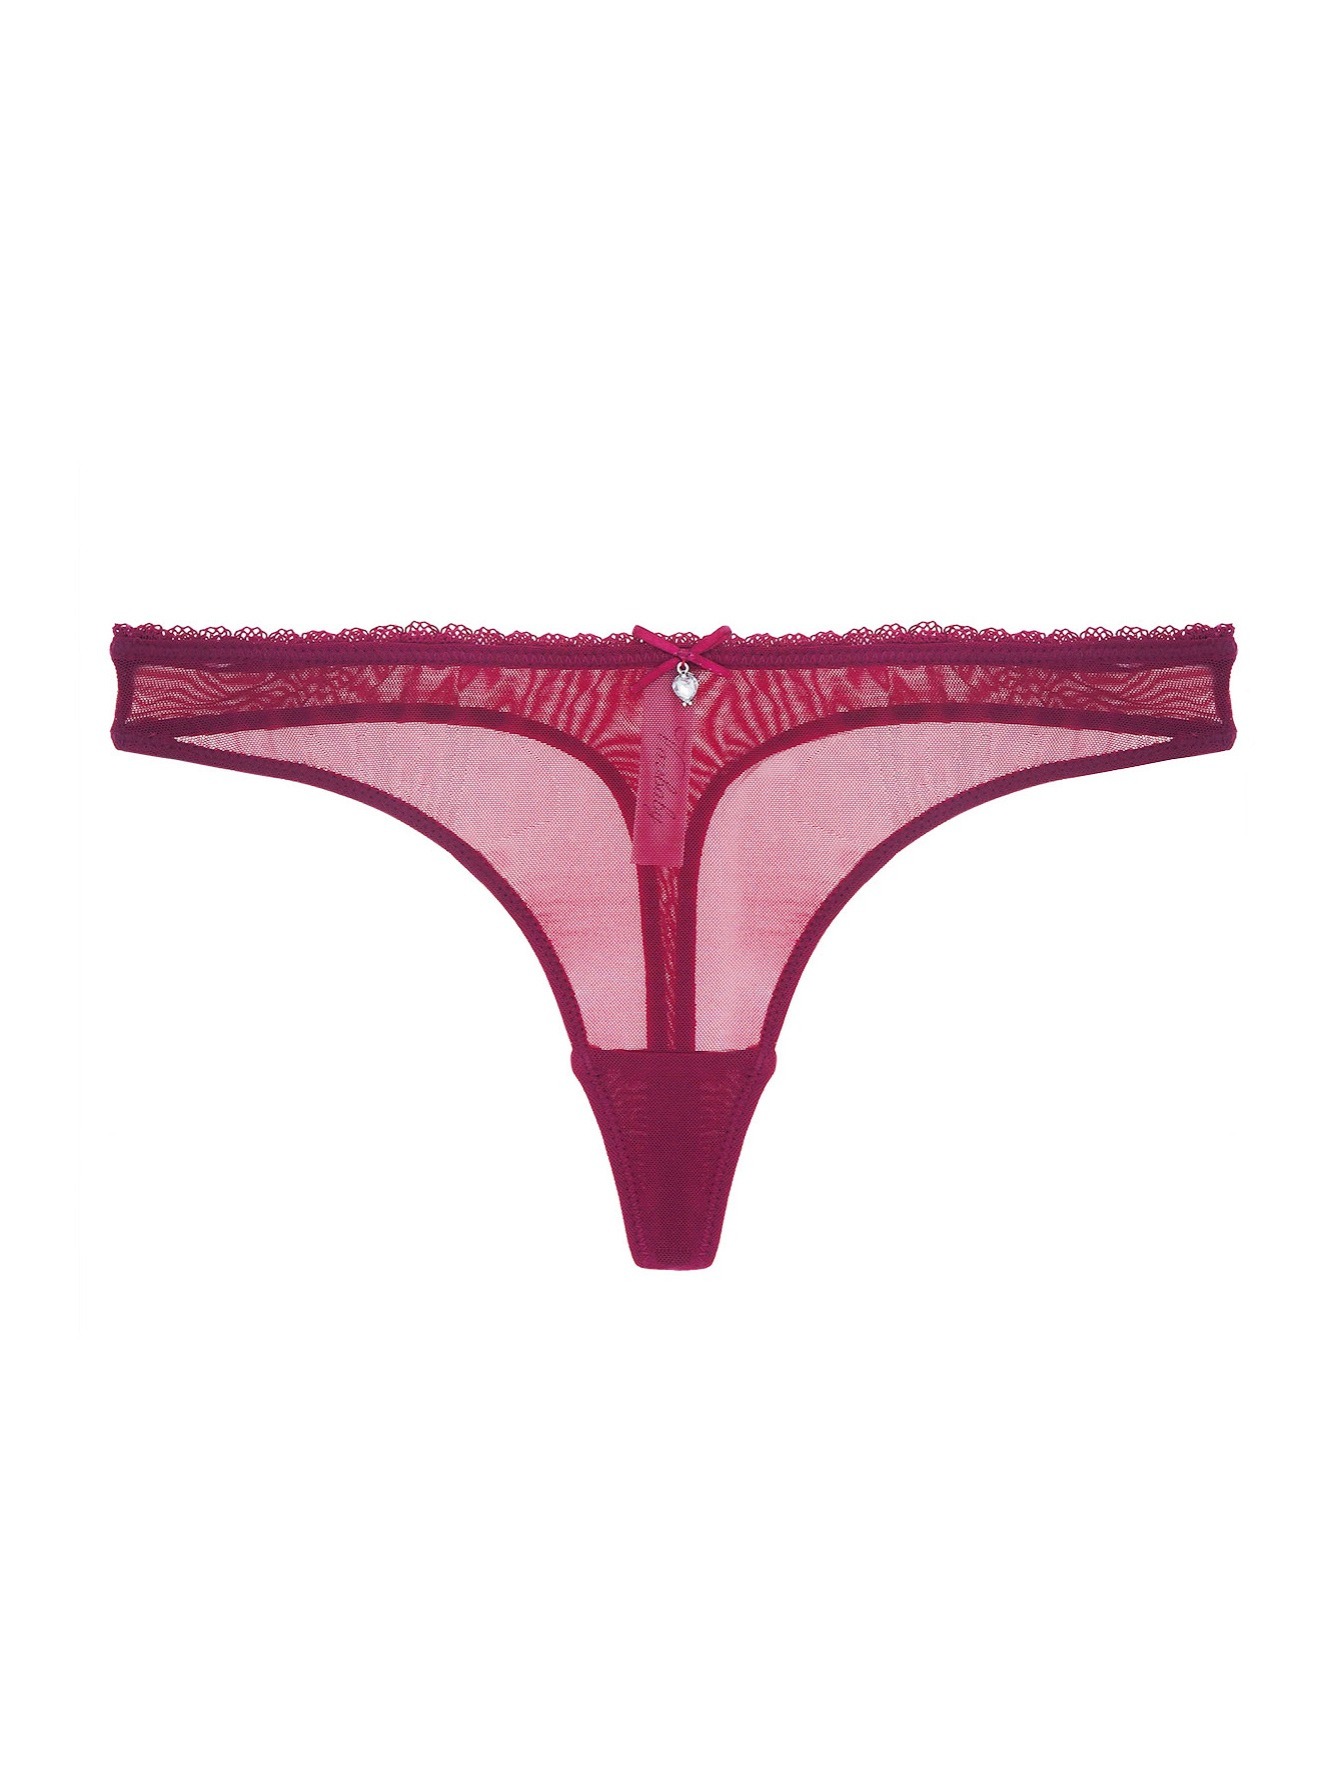 Sheer Lace Lingerie Set, Push Up Mesh Intimates Bra & Semi-Sheer Lace  G-String, Women's Lingerie & Underwear